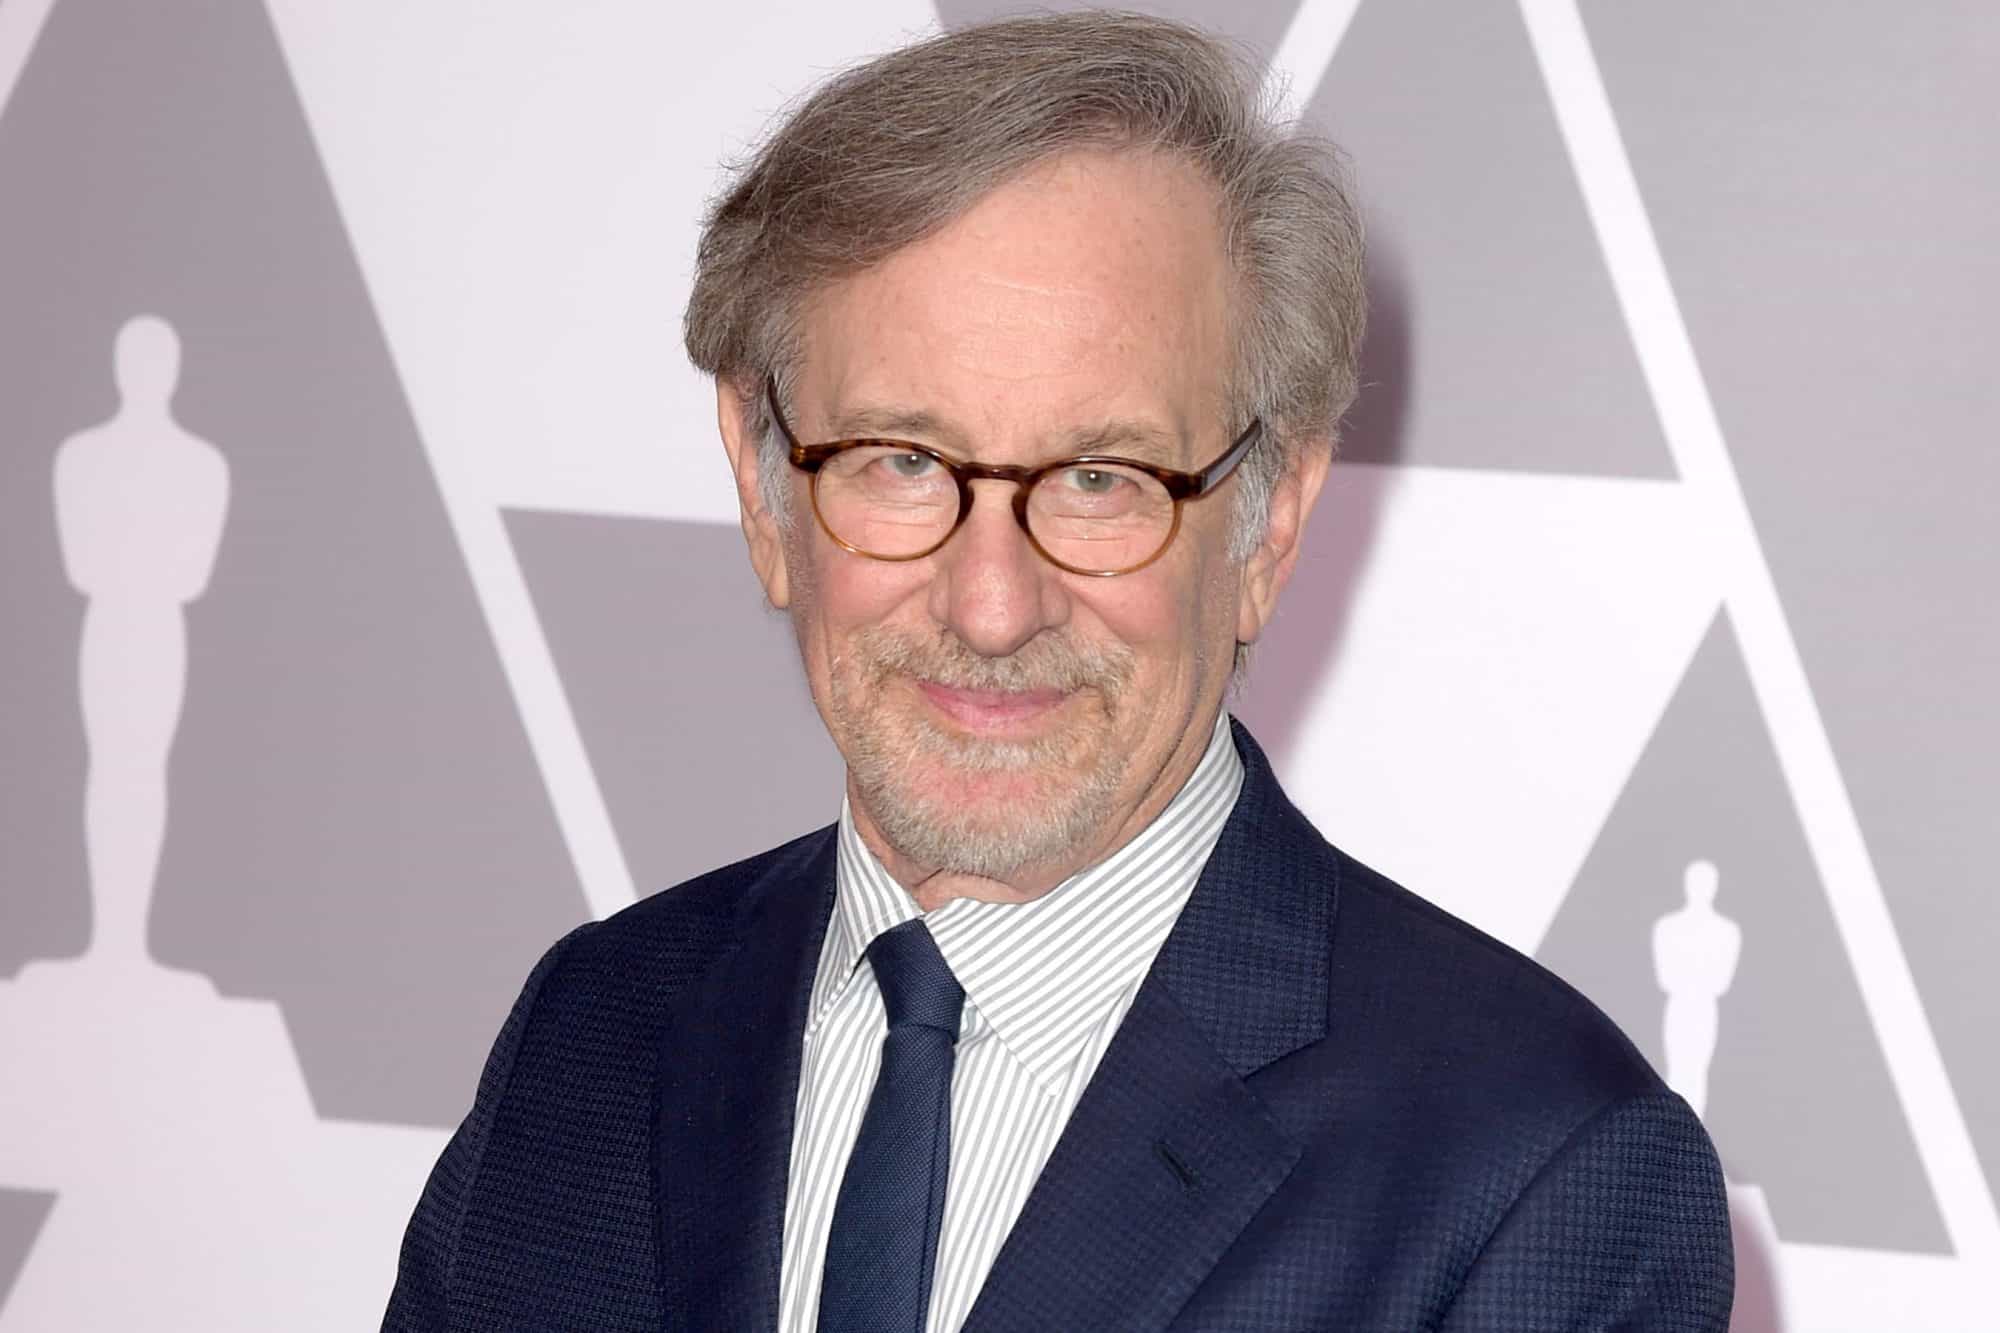 Steven Spielberg wearing a blue coat and eyeglasses